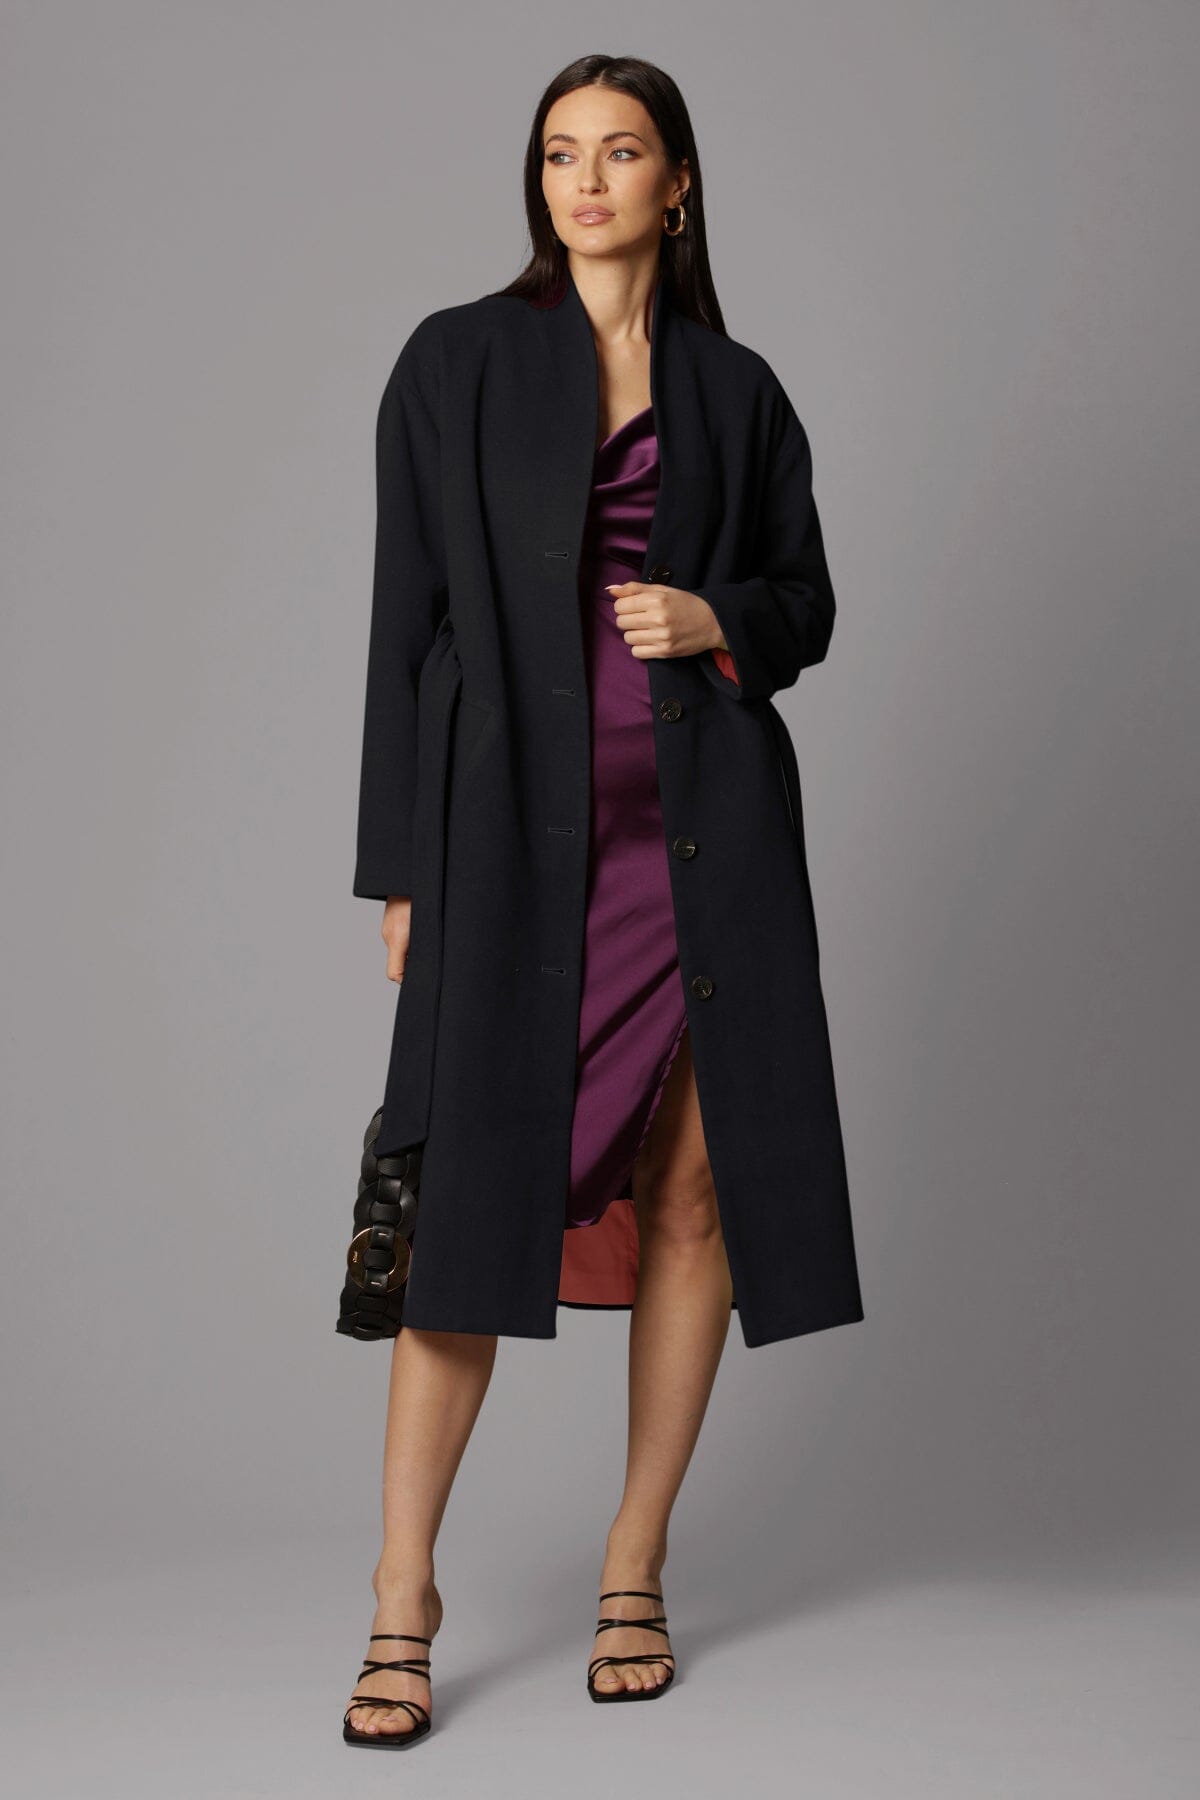 black wool blend overlap collar long coat jacket - figure flattering sophisticated work appropriate coats jackets for women